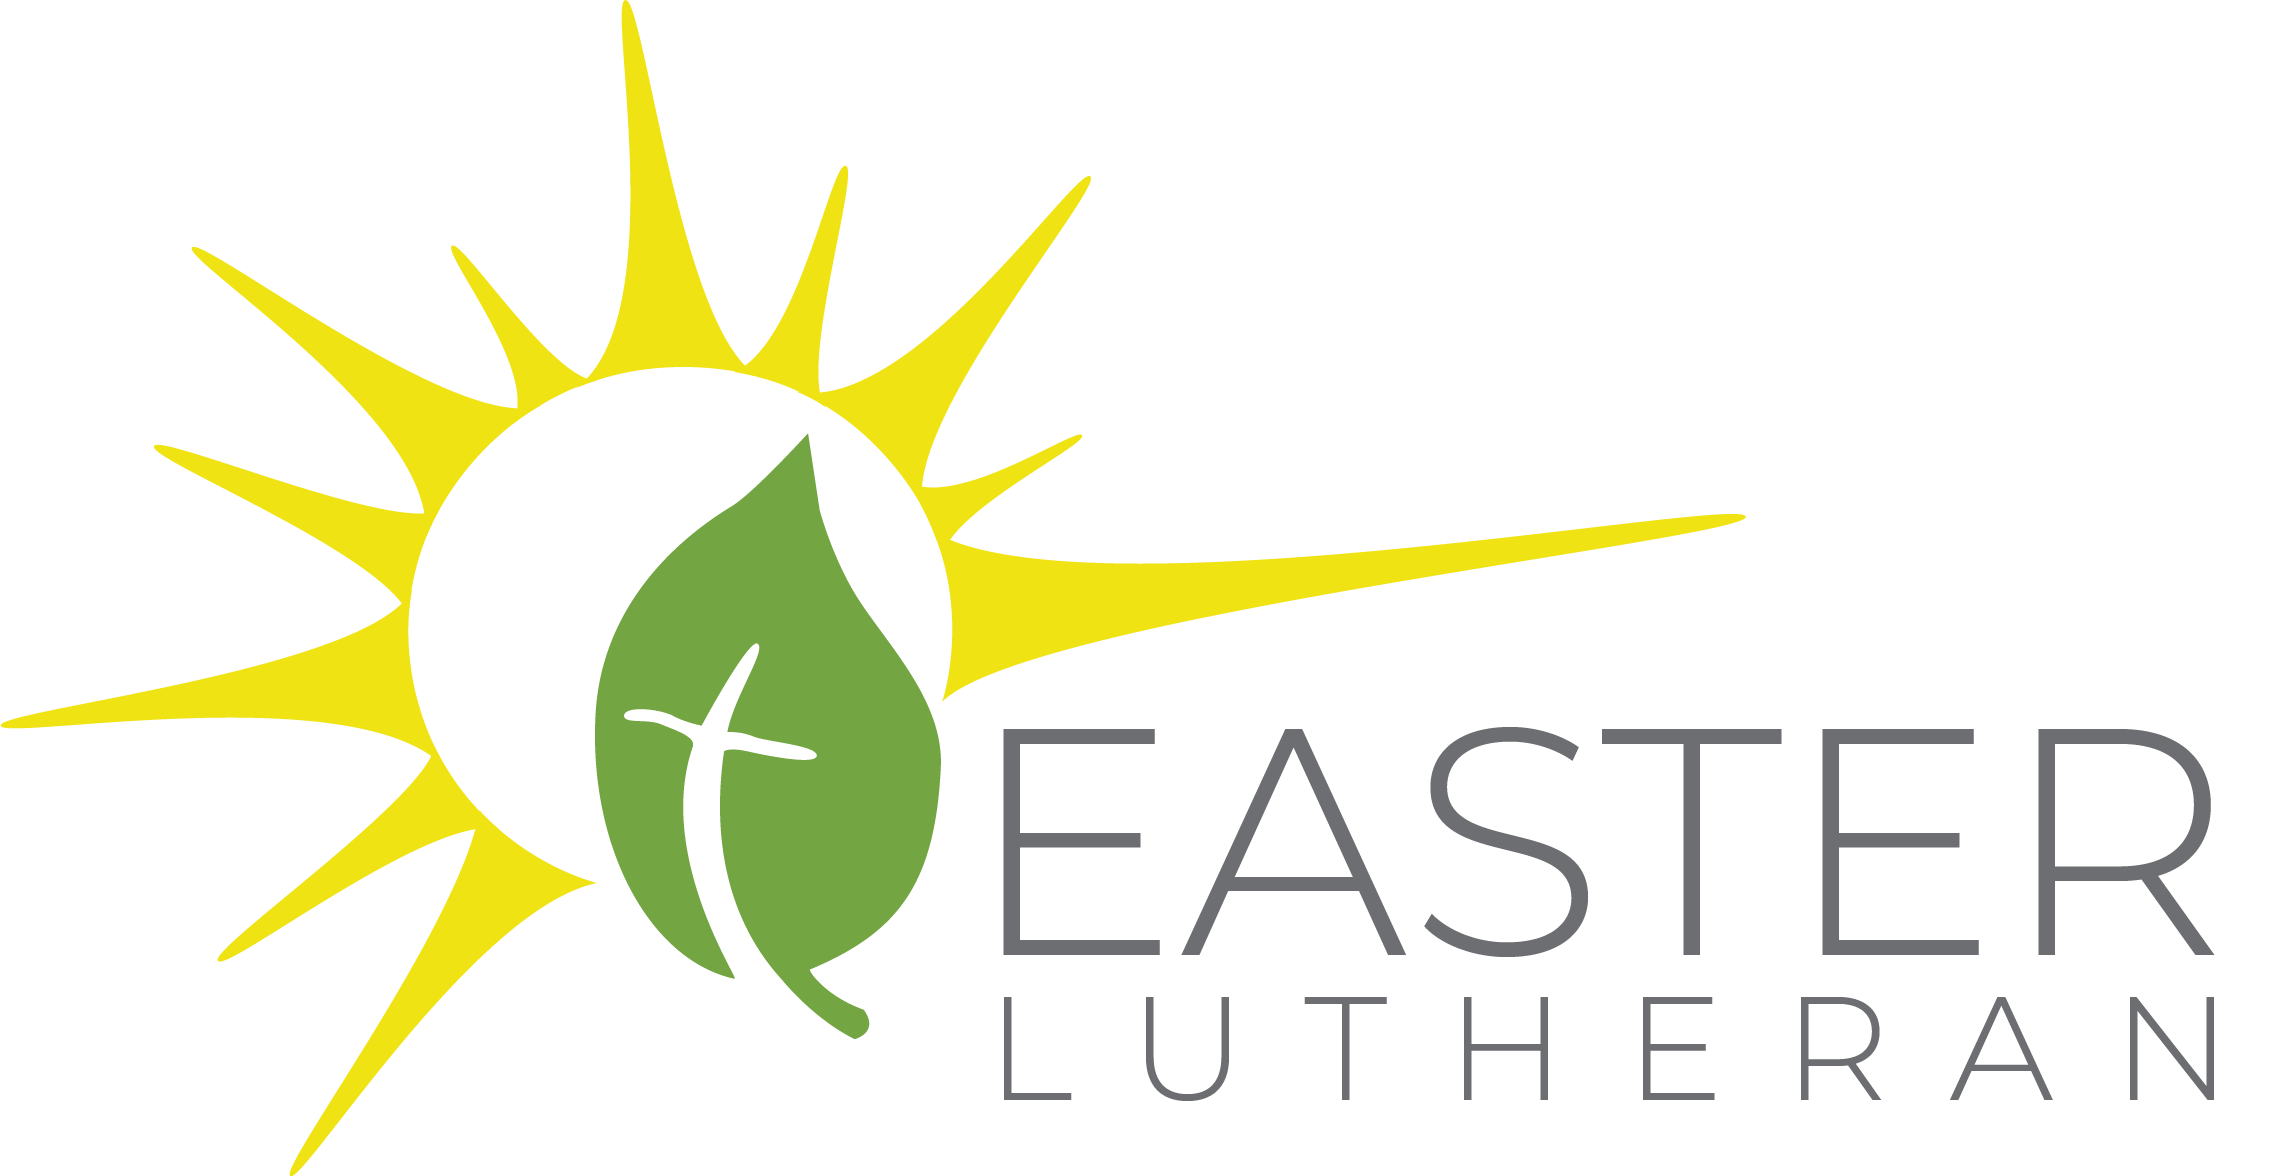 Easter lutheran church